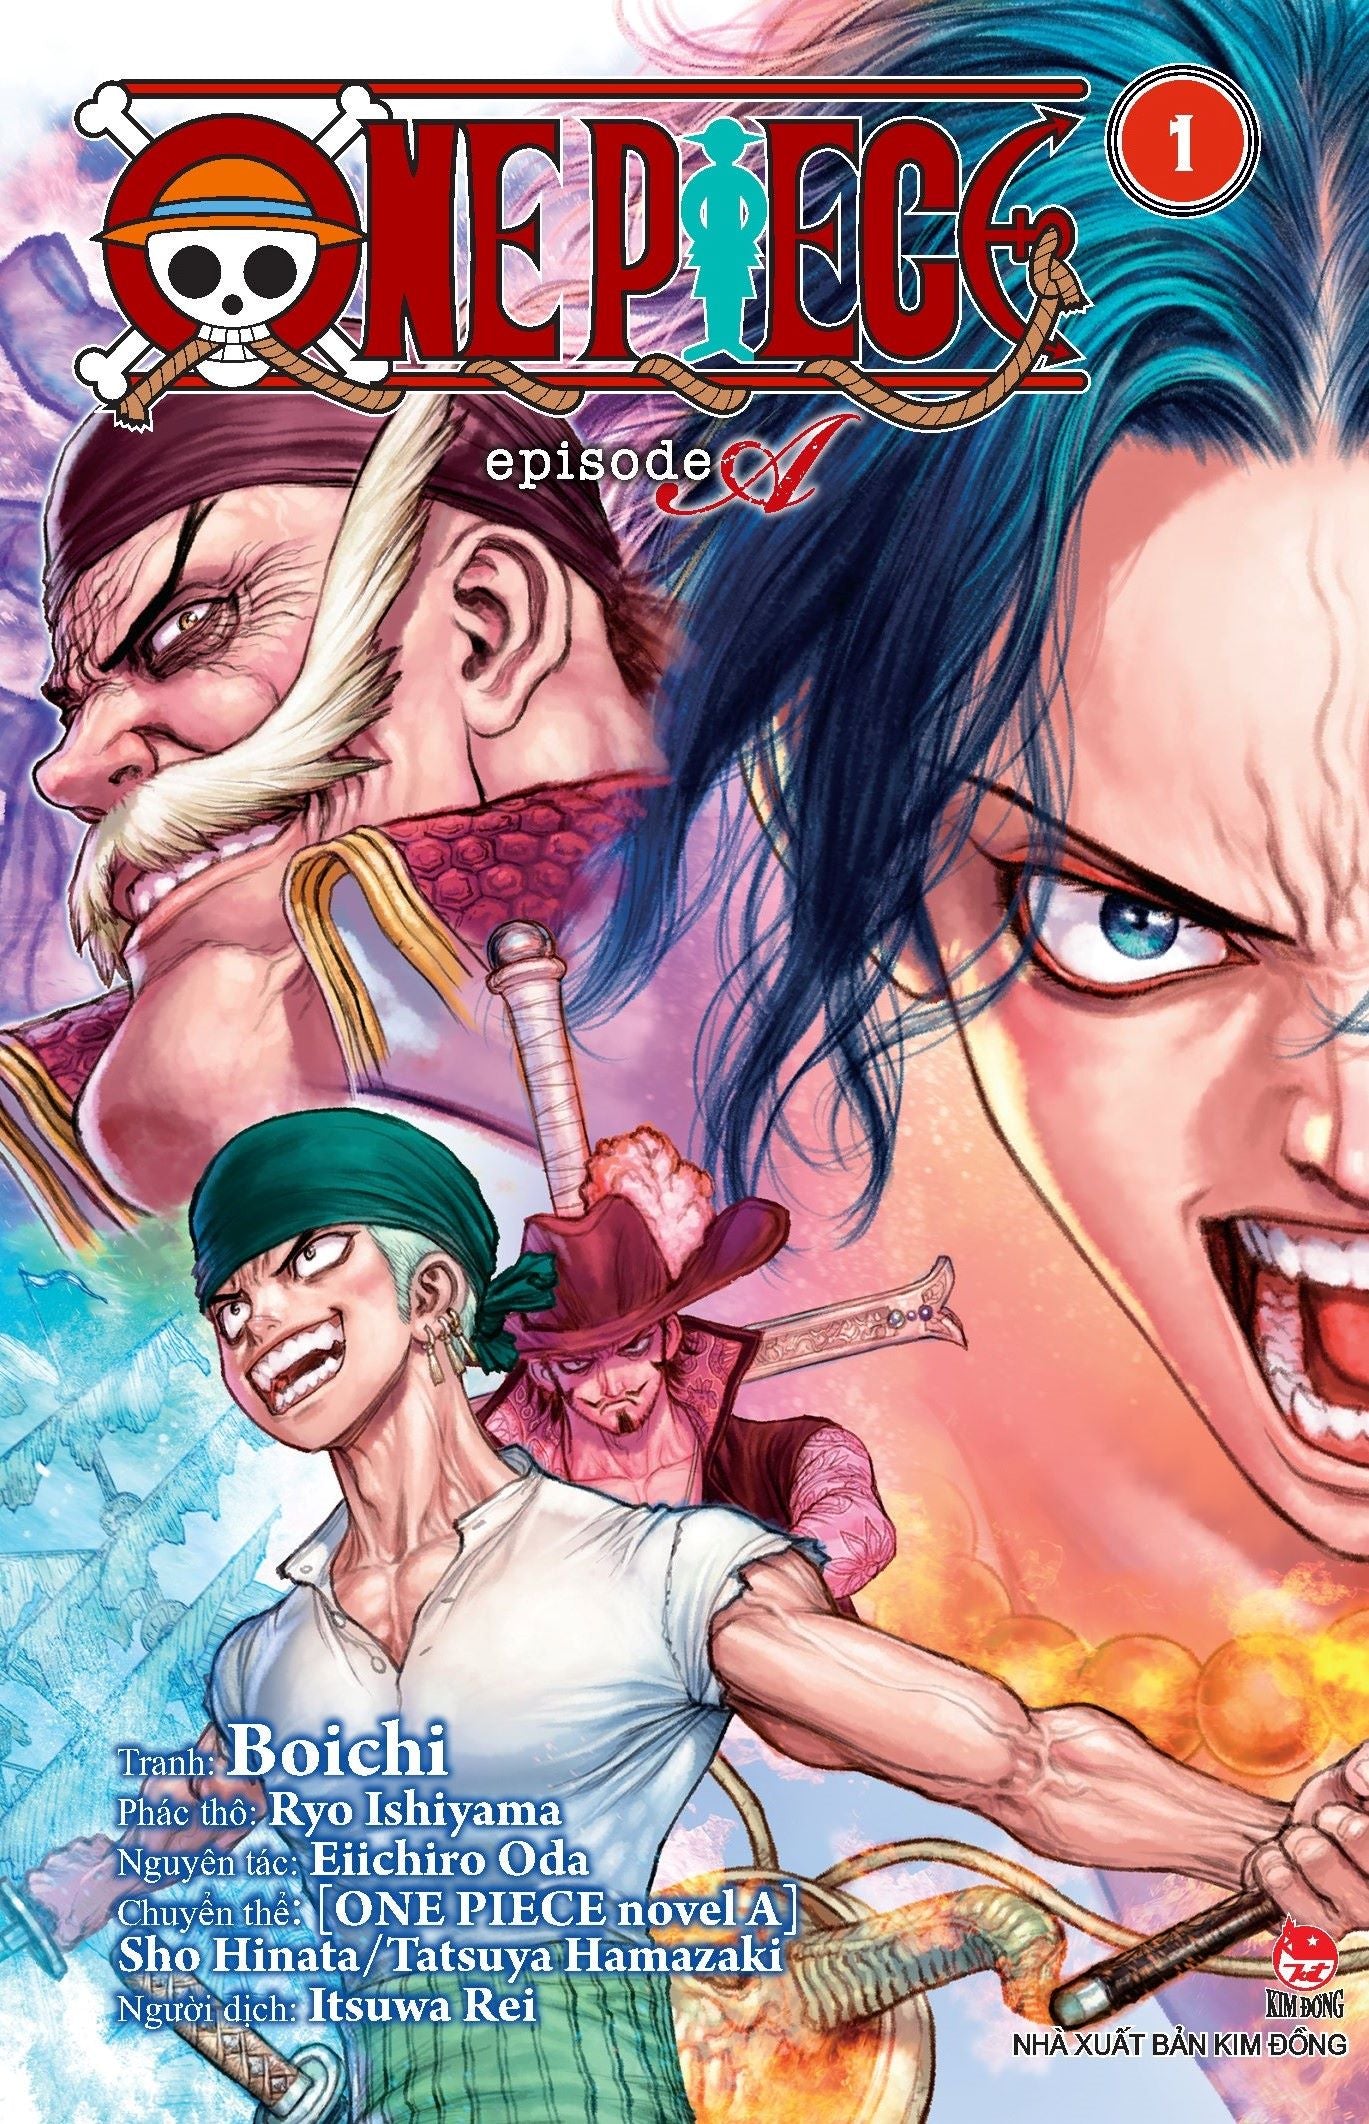 Truyện Tranh One Piece Episode A - Trọn Bộ 2 Tập